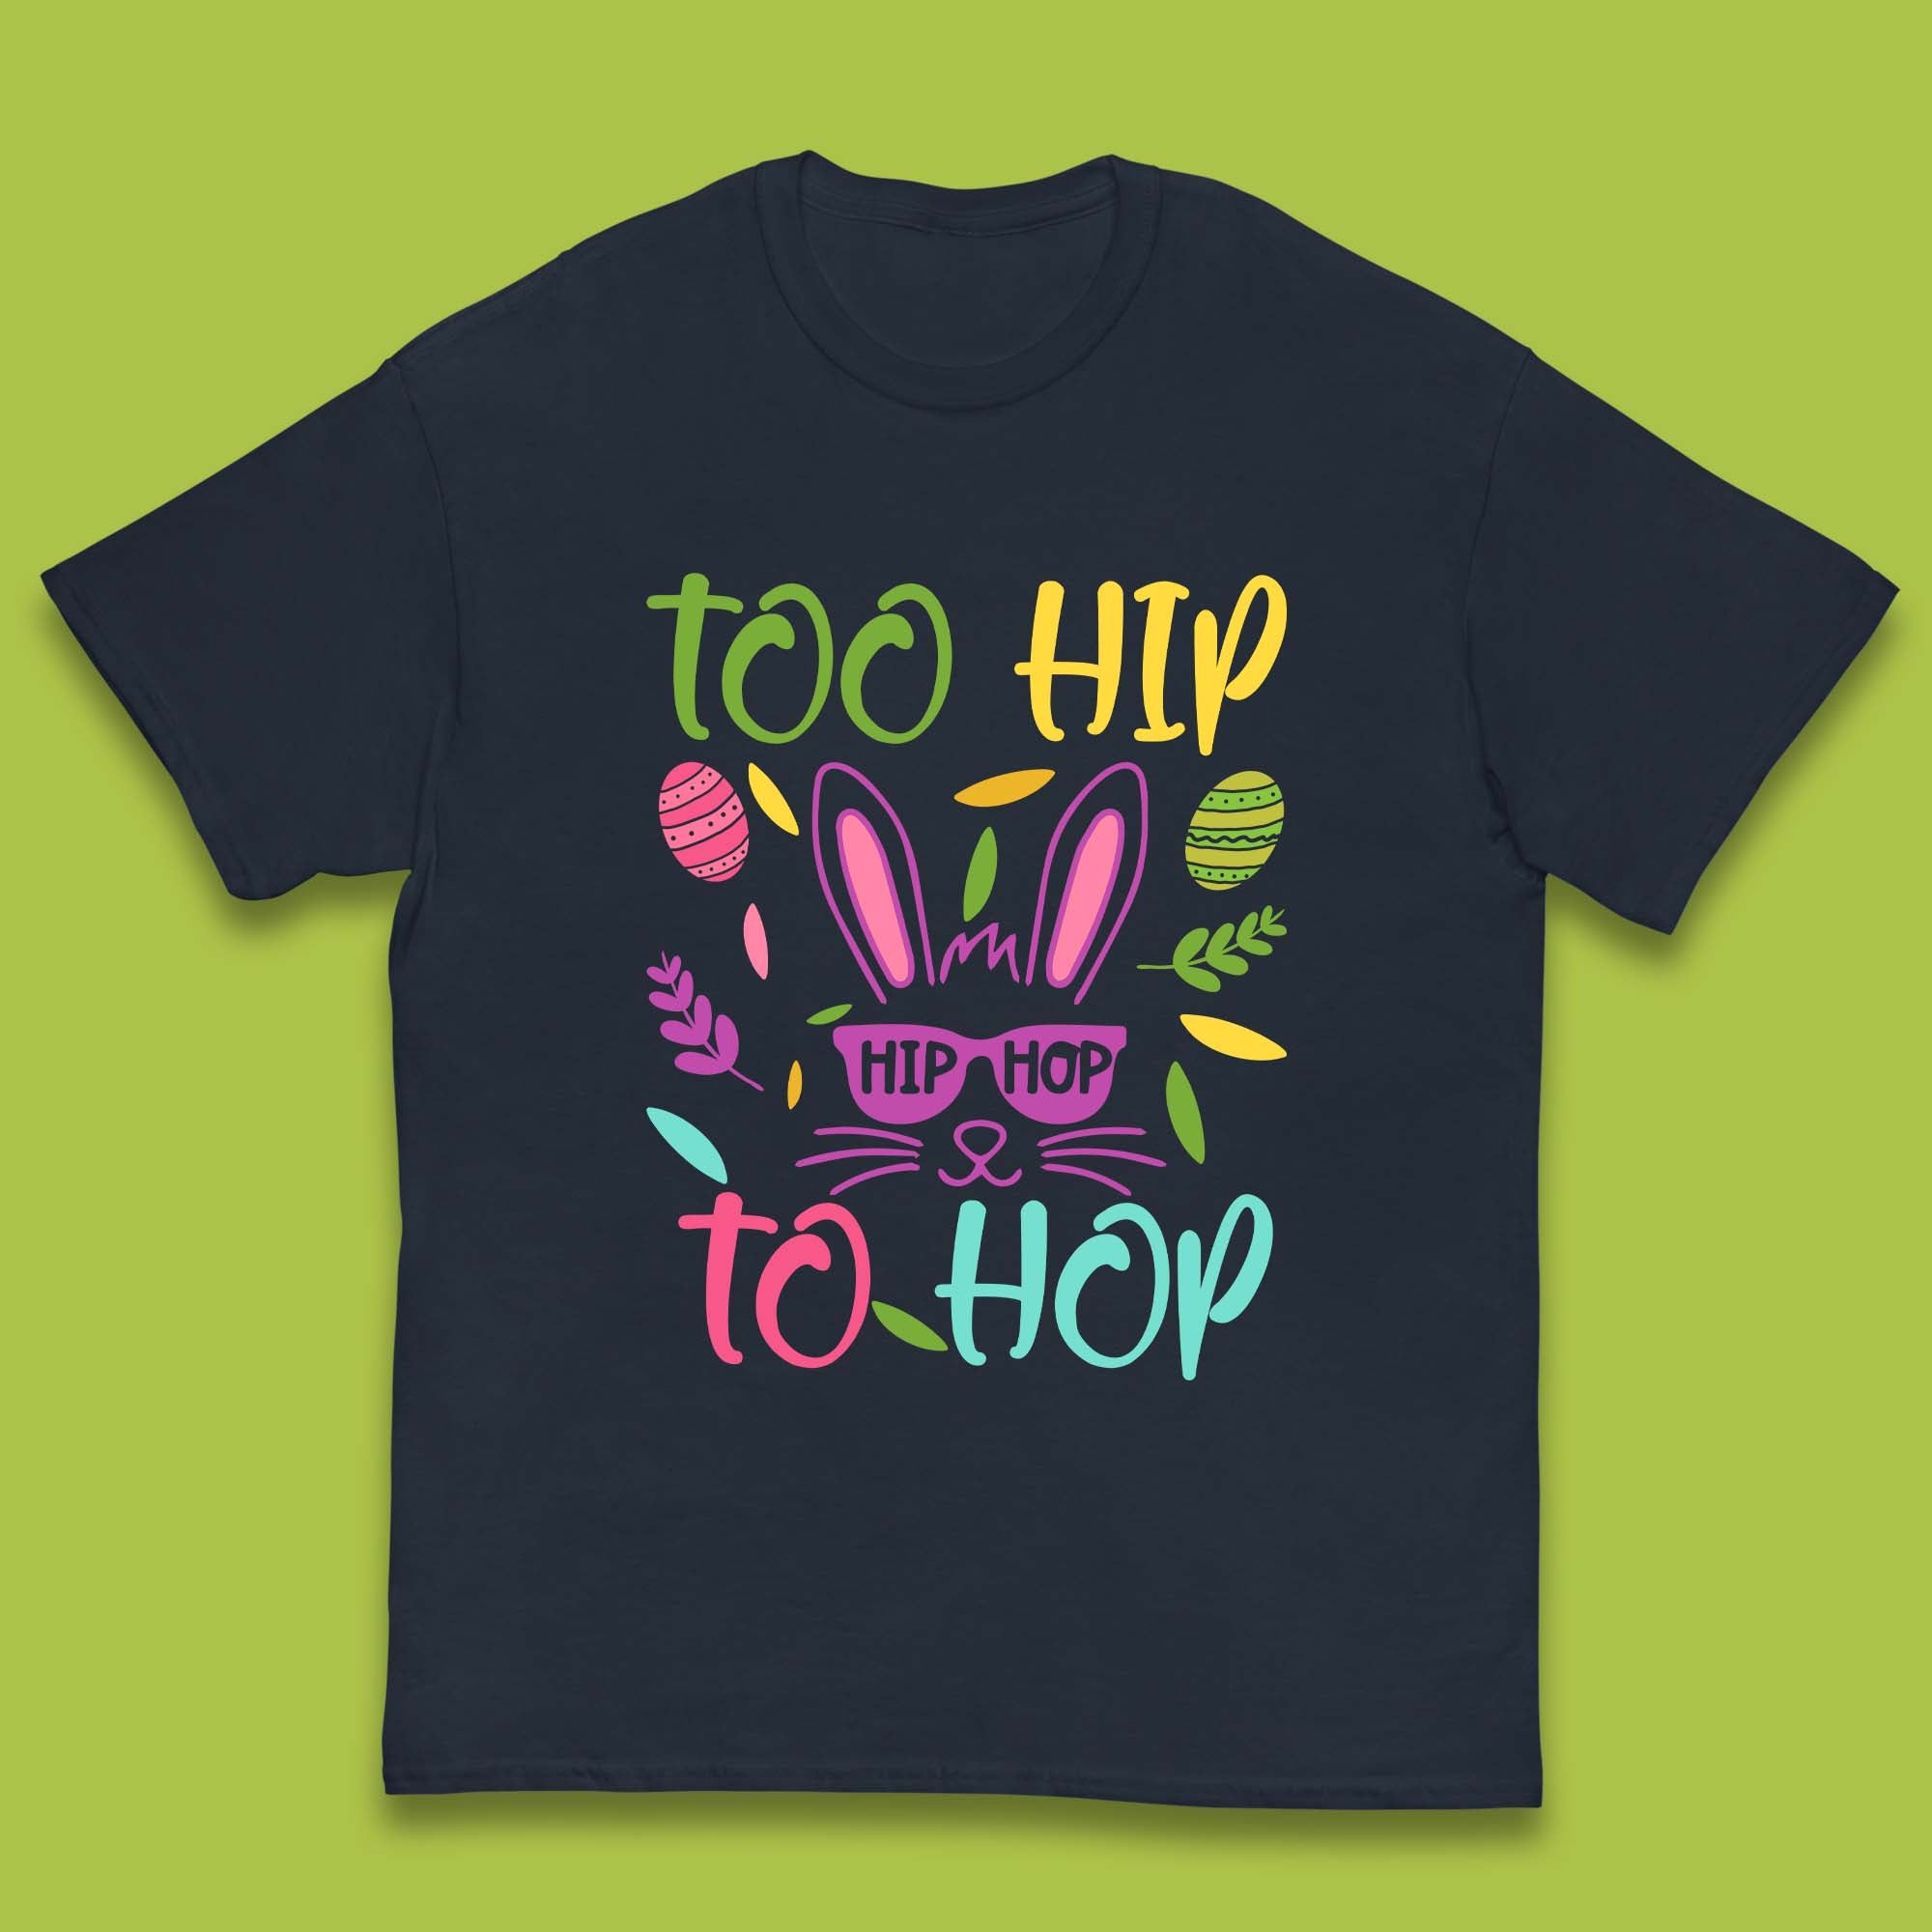 Too Hip To Hop Kids T-Shirt